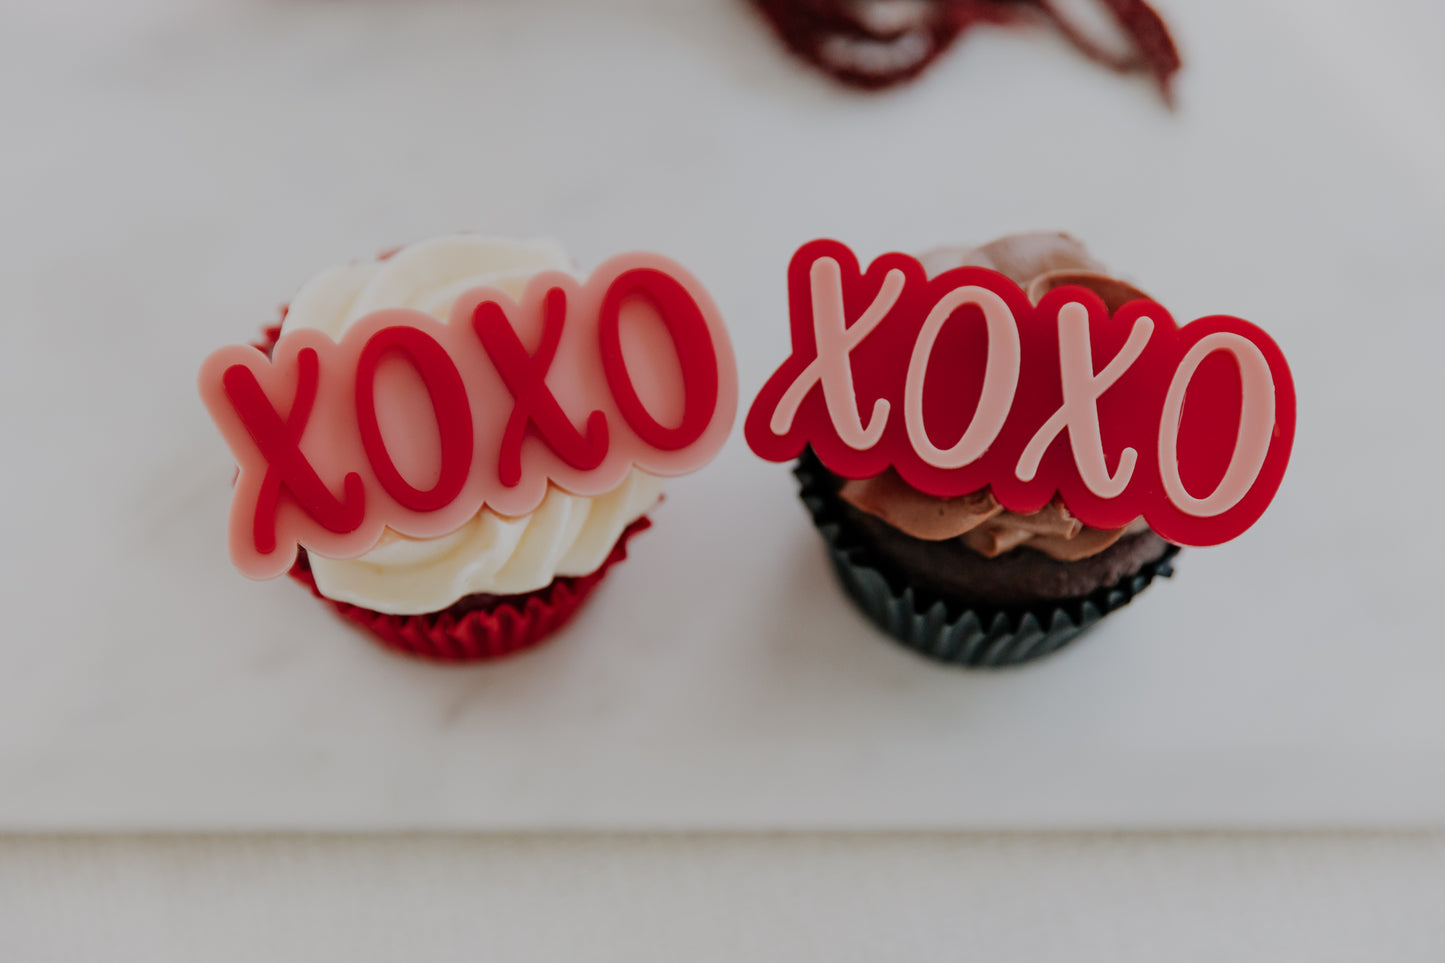 Valentine's Day Cake Charm - "XOXO"